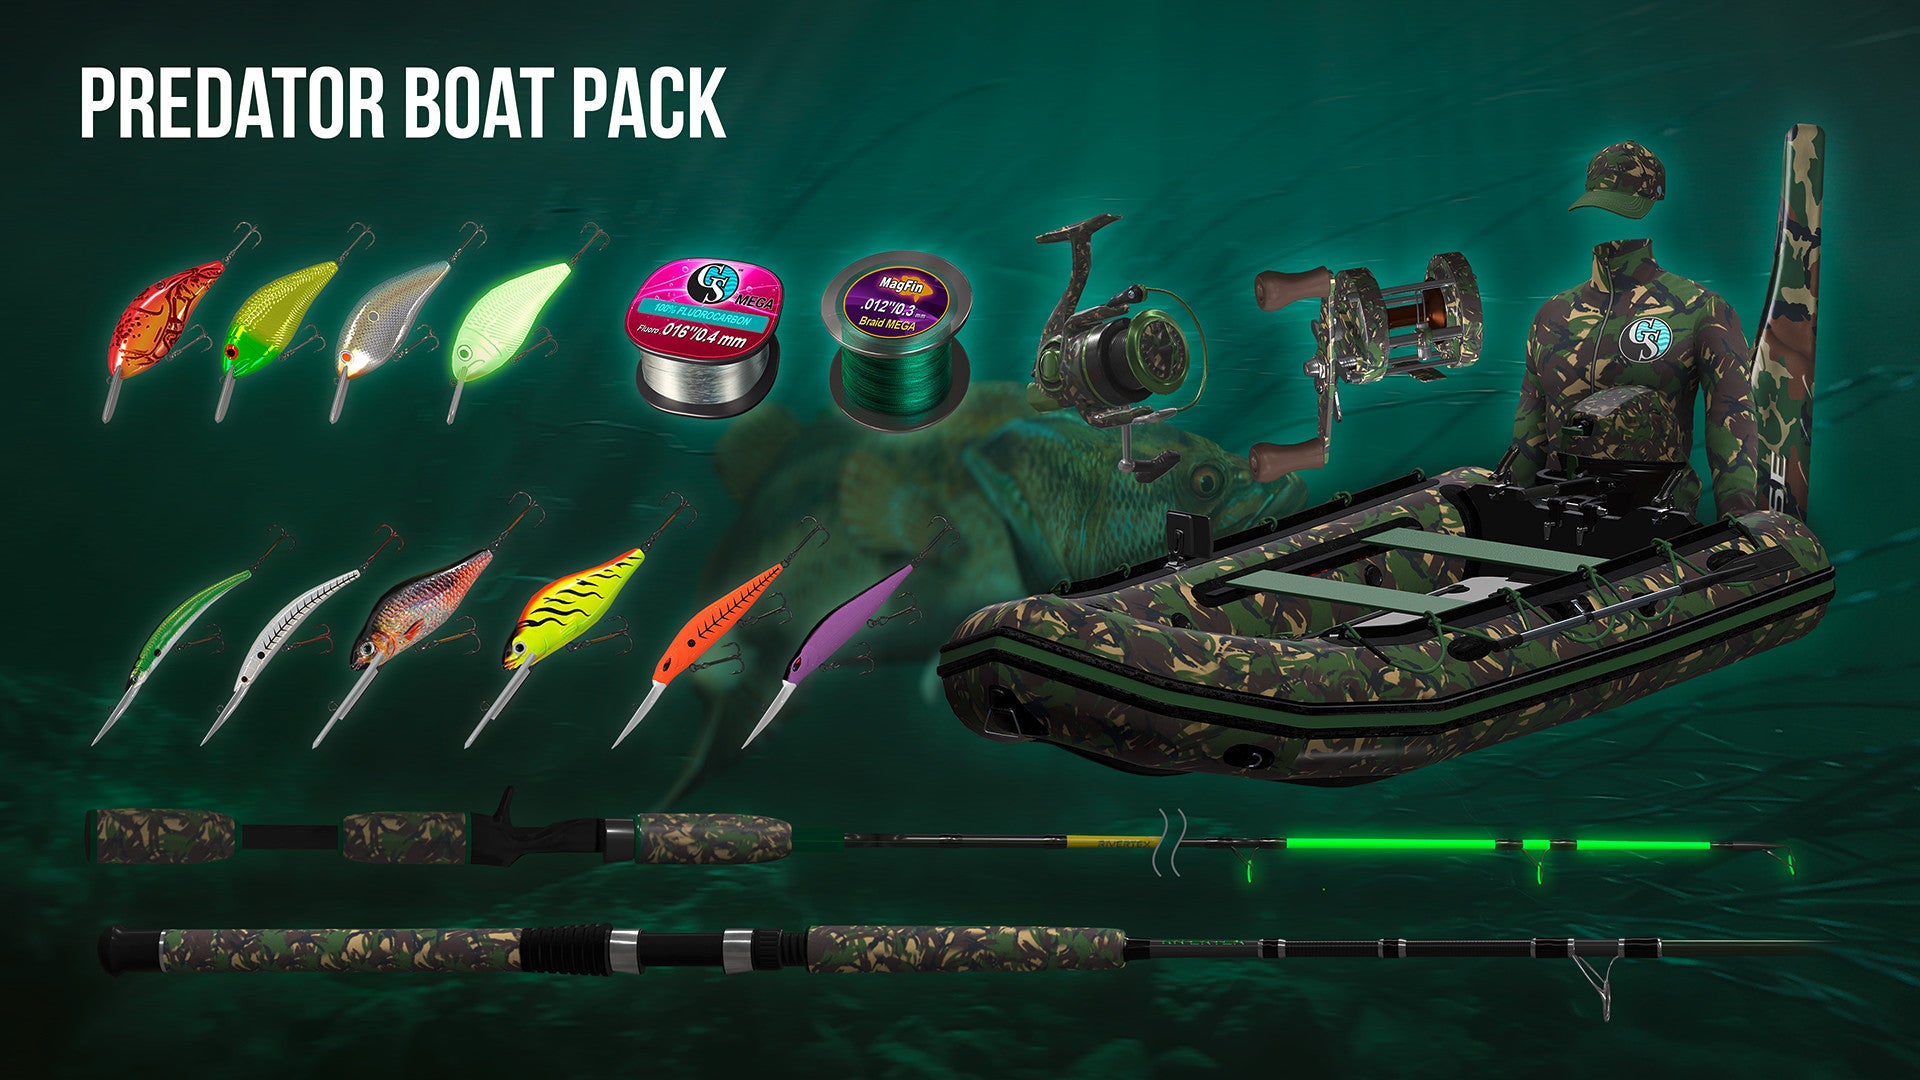 The Fisherman - Fishing Planet: Predator Boat Pack DLC